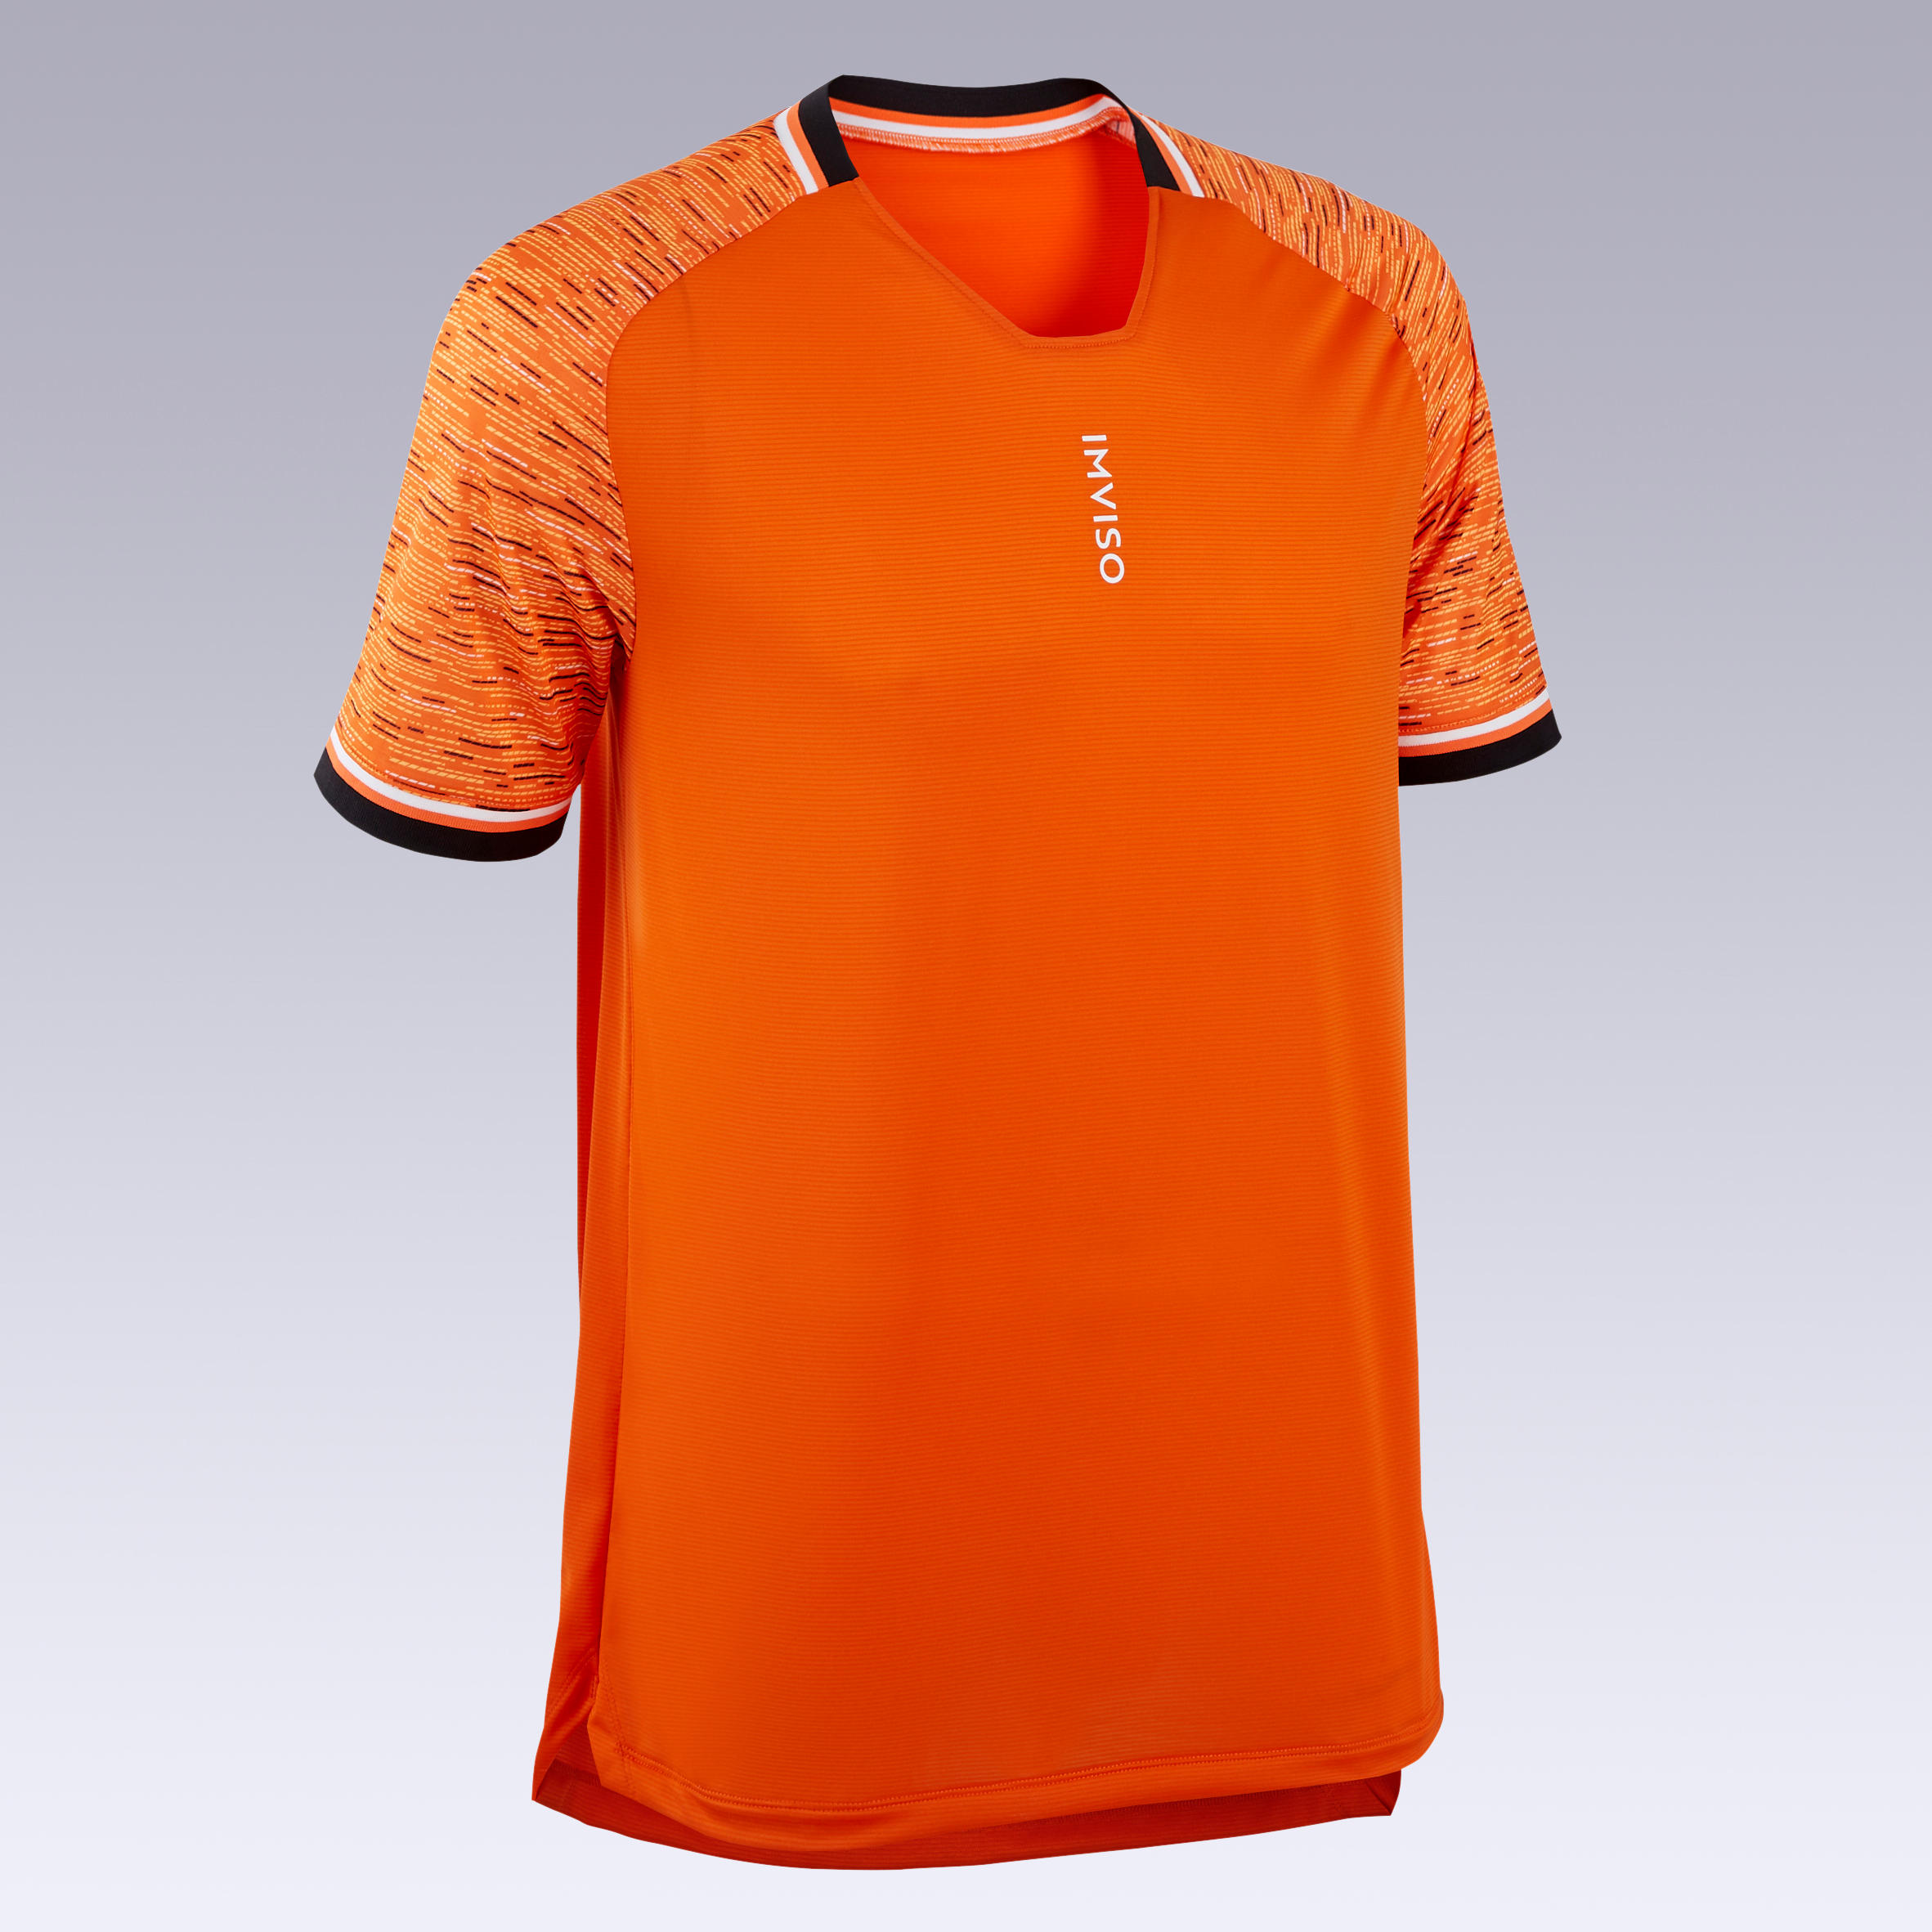 Men's Futsal Shirt - Orange 7/7